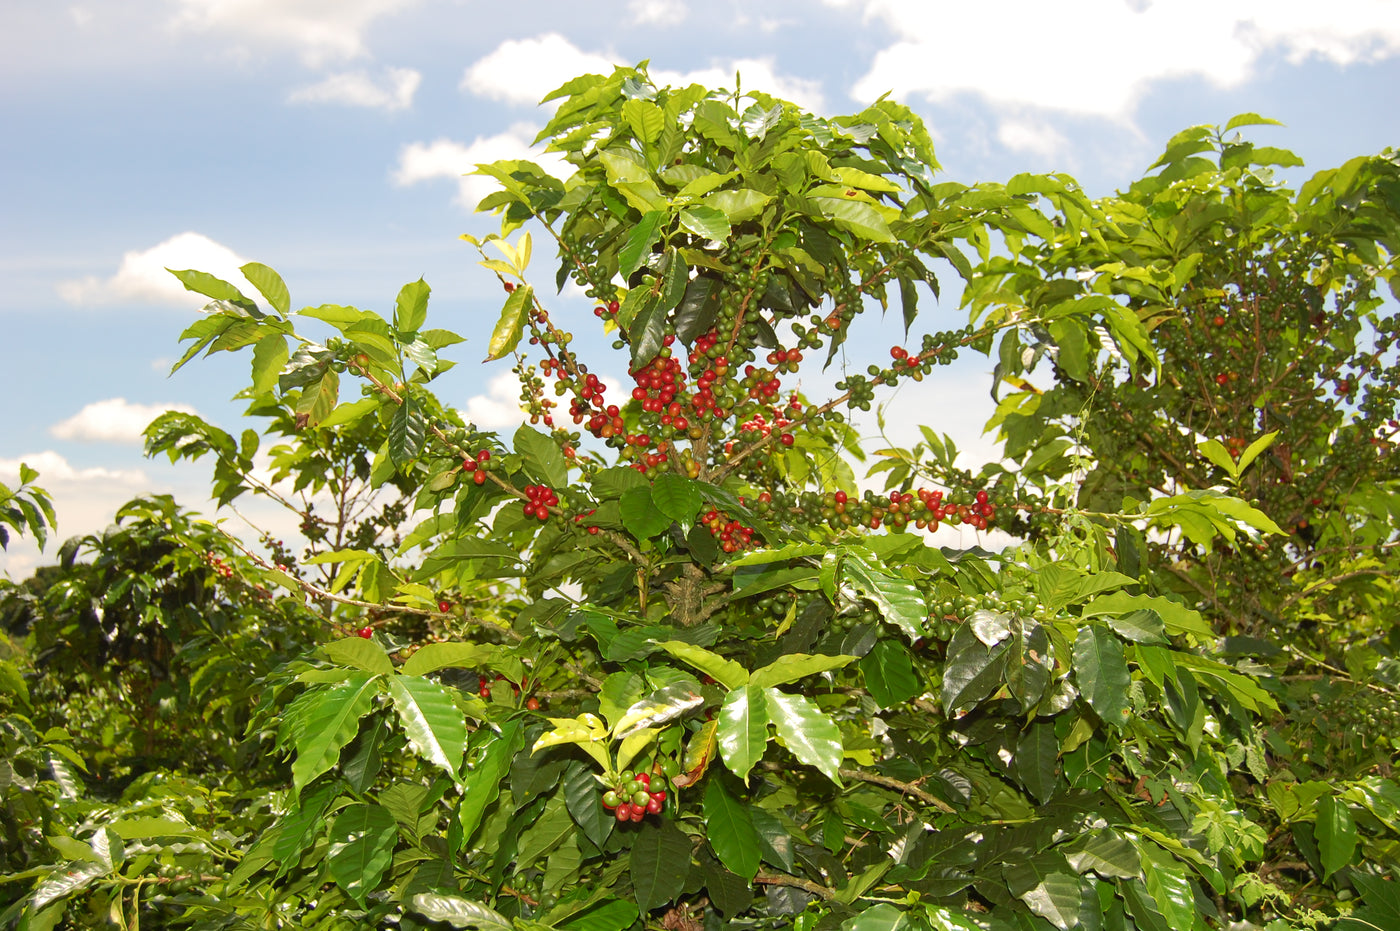 Swiss Water Decaf, Colombia coffee cherries.